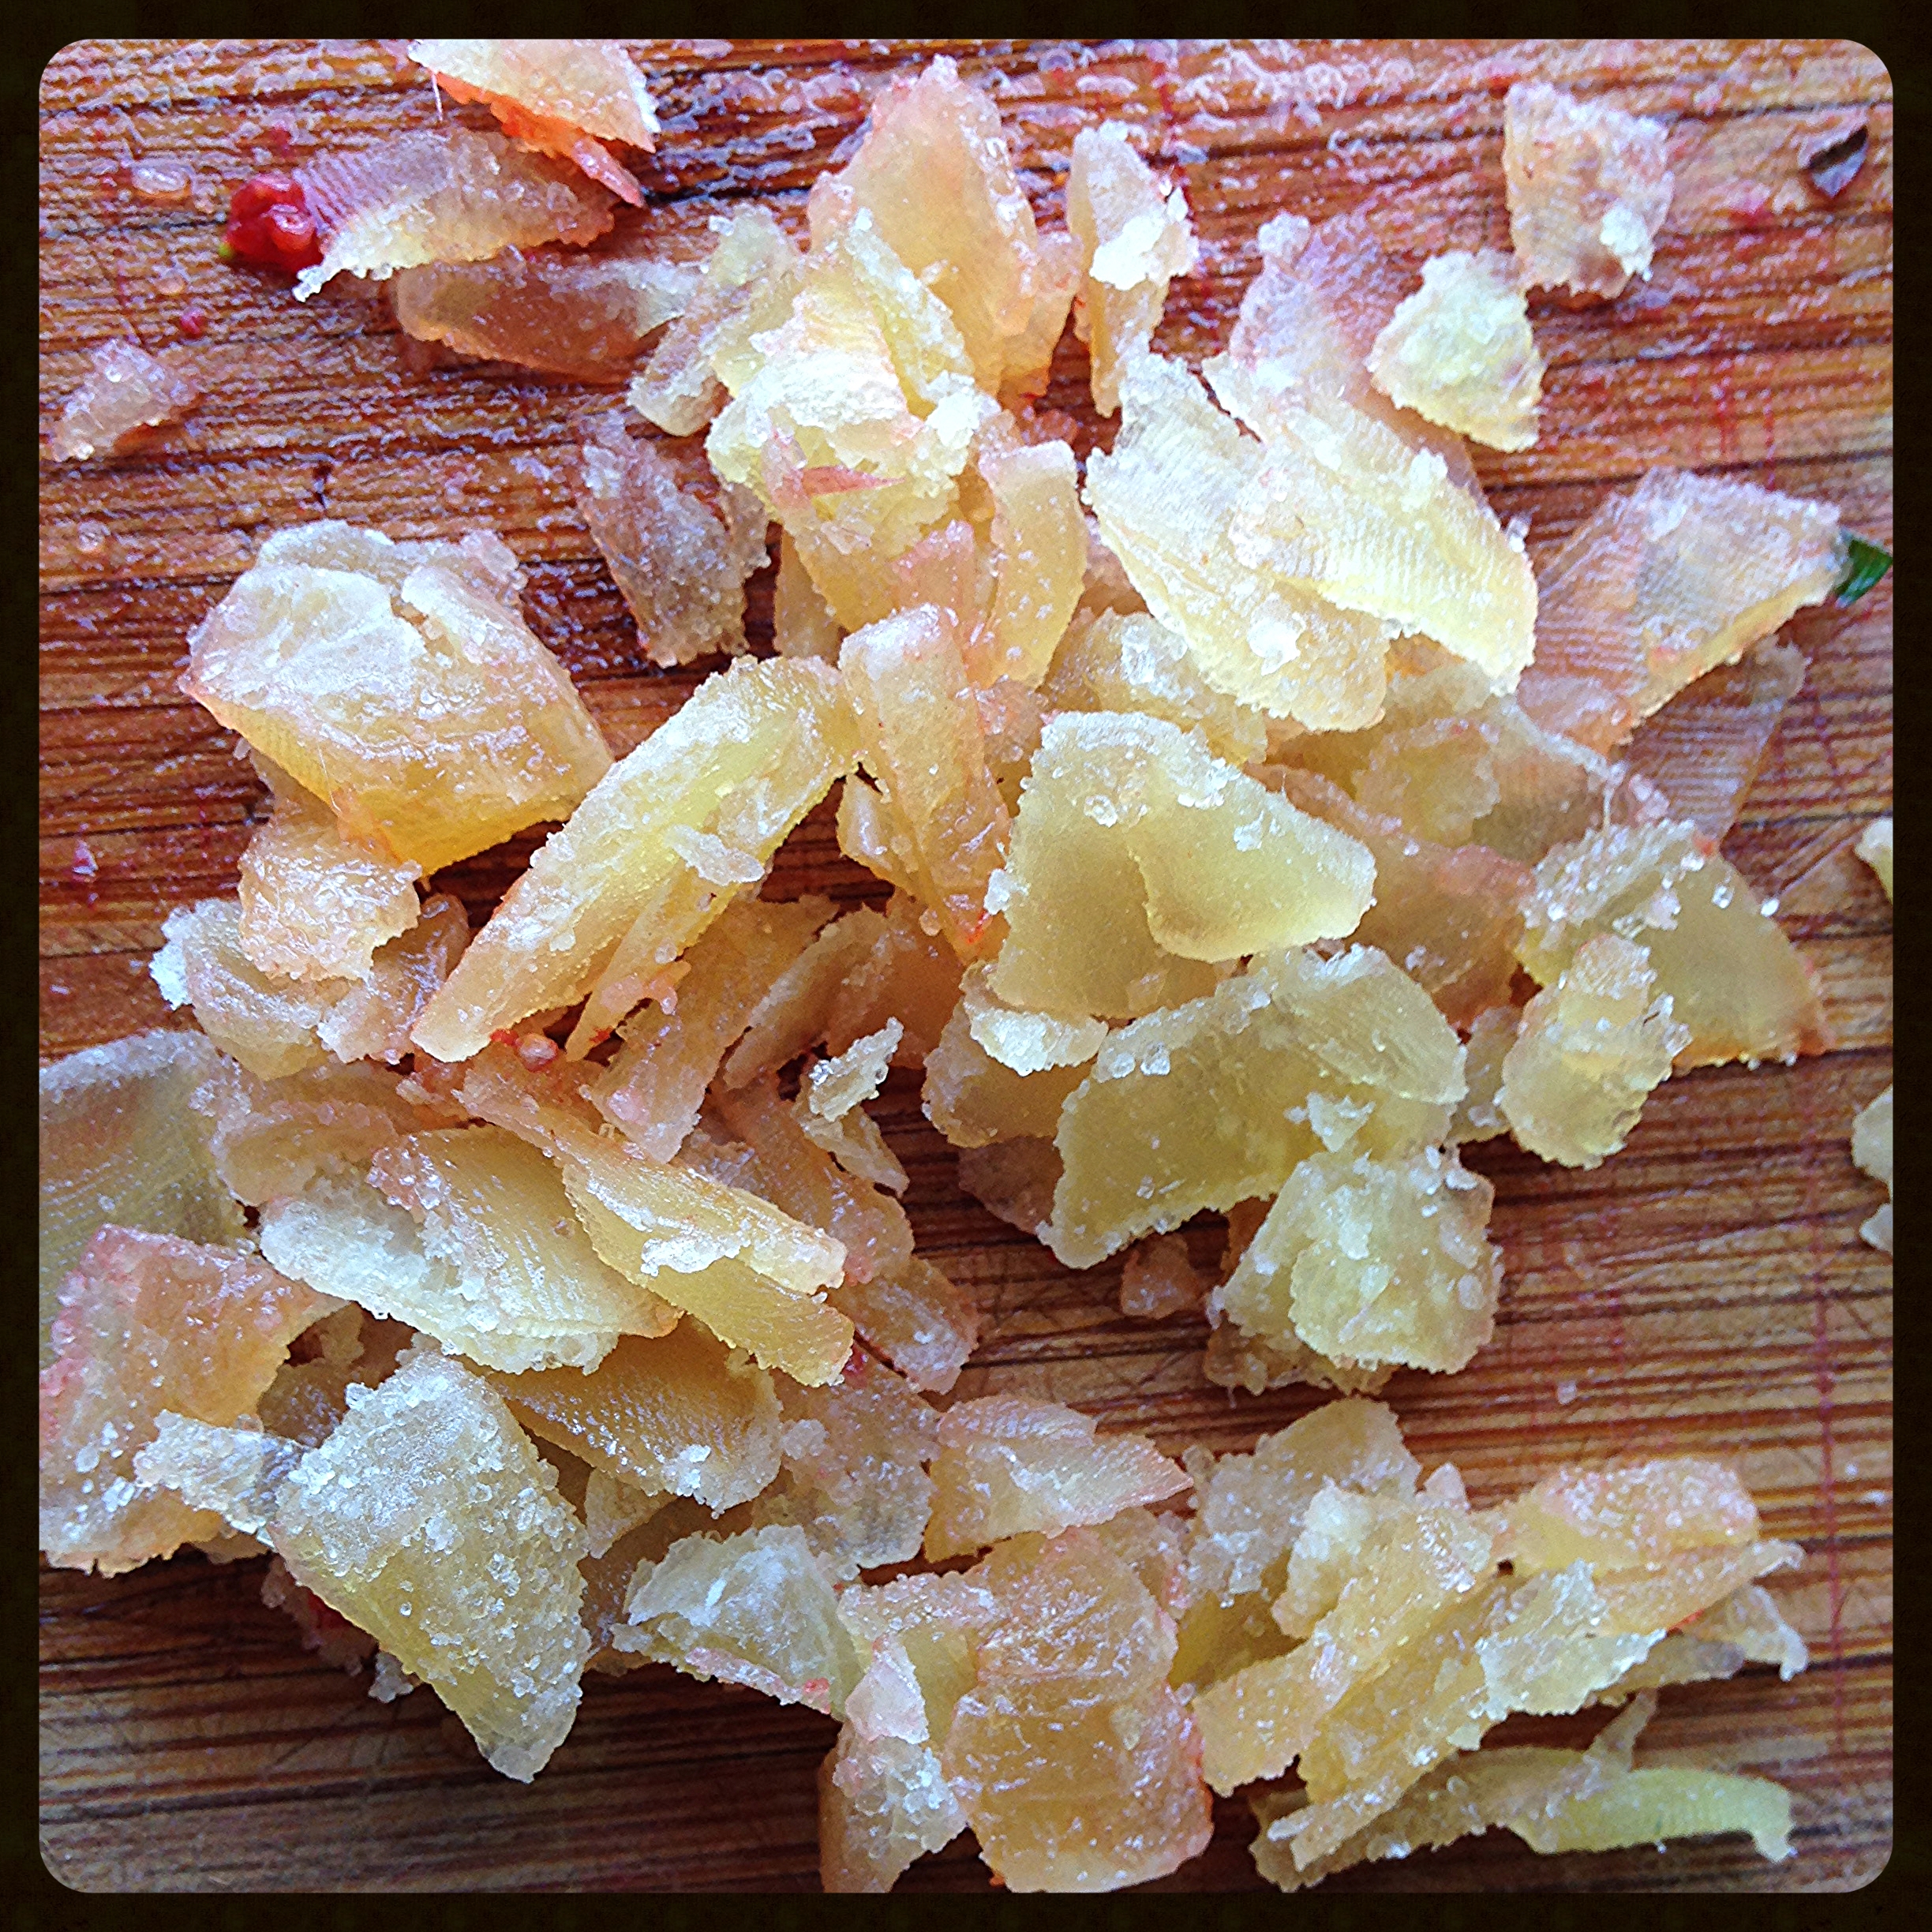 Chopped crystallized ginger